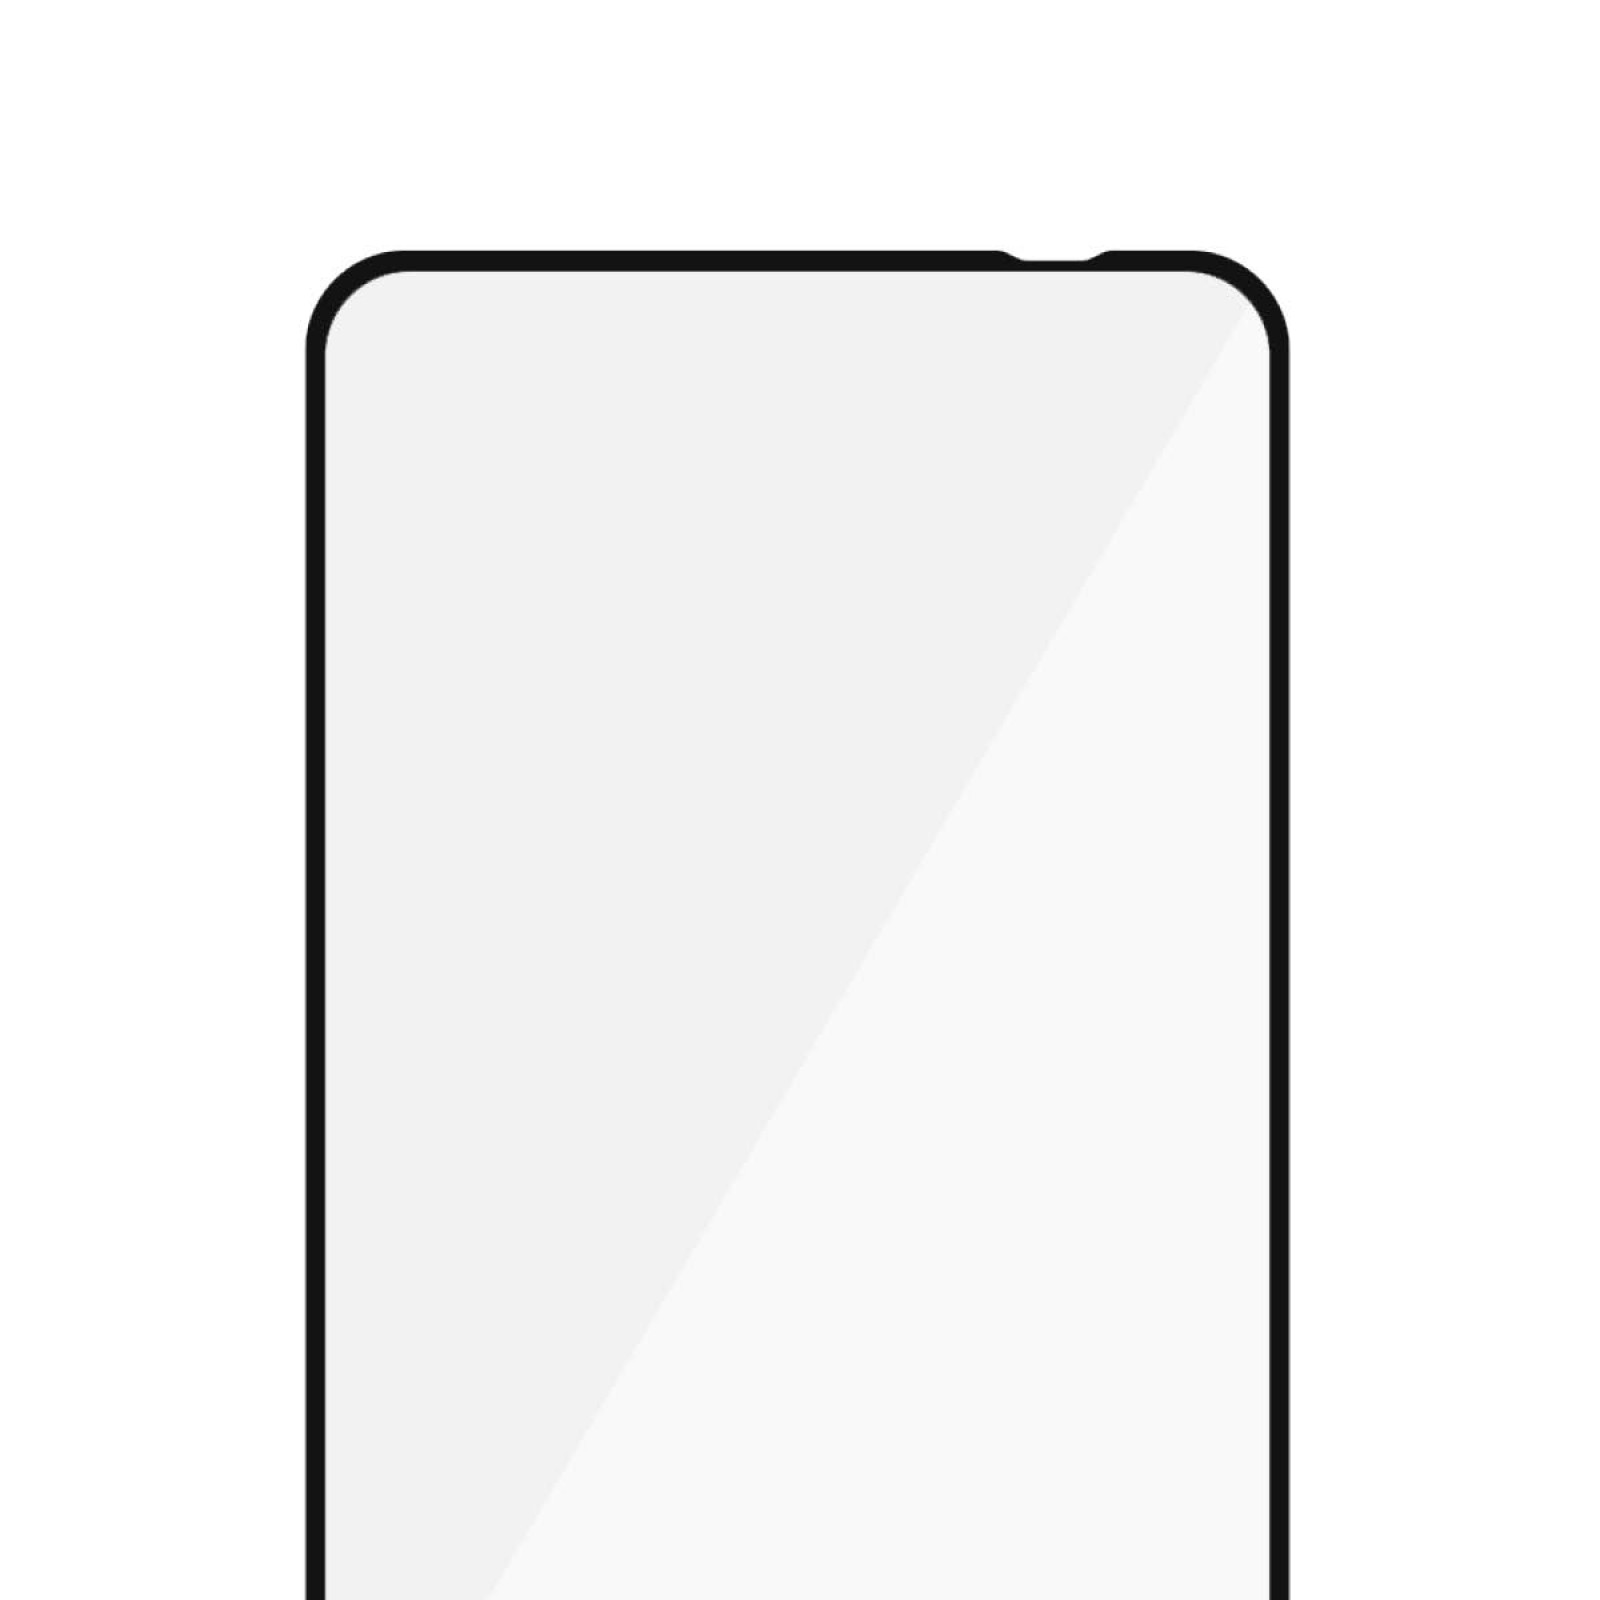 Стъклен протектор PanzerGlass за Xiaomi Redmi 10,Redmi 10 2022, Redmi Note 11 4G, CaseFriendly - Черно